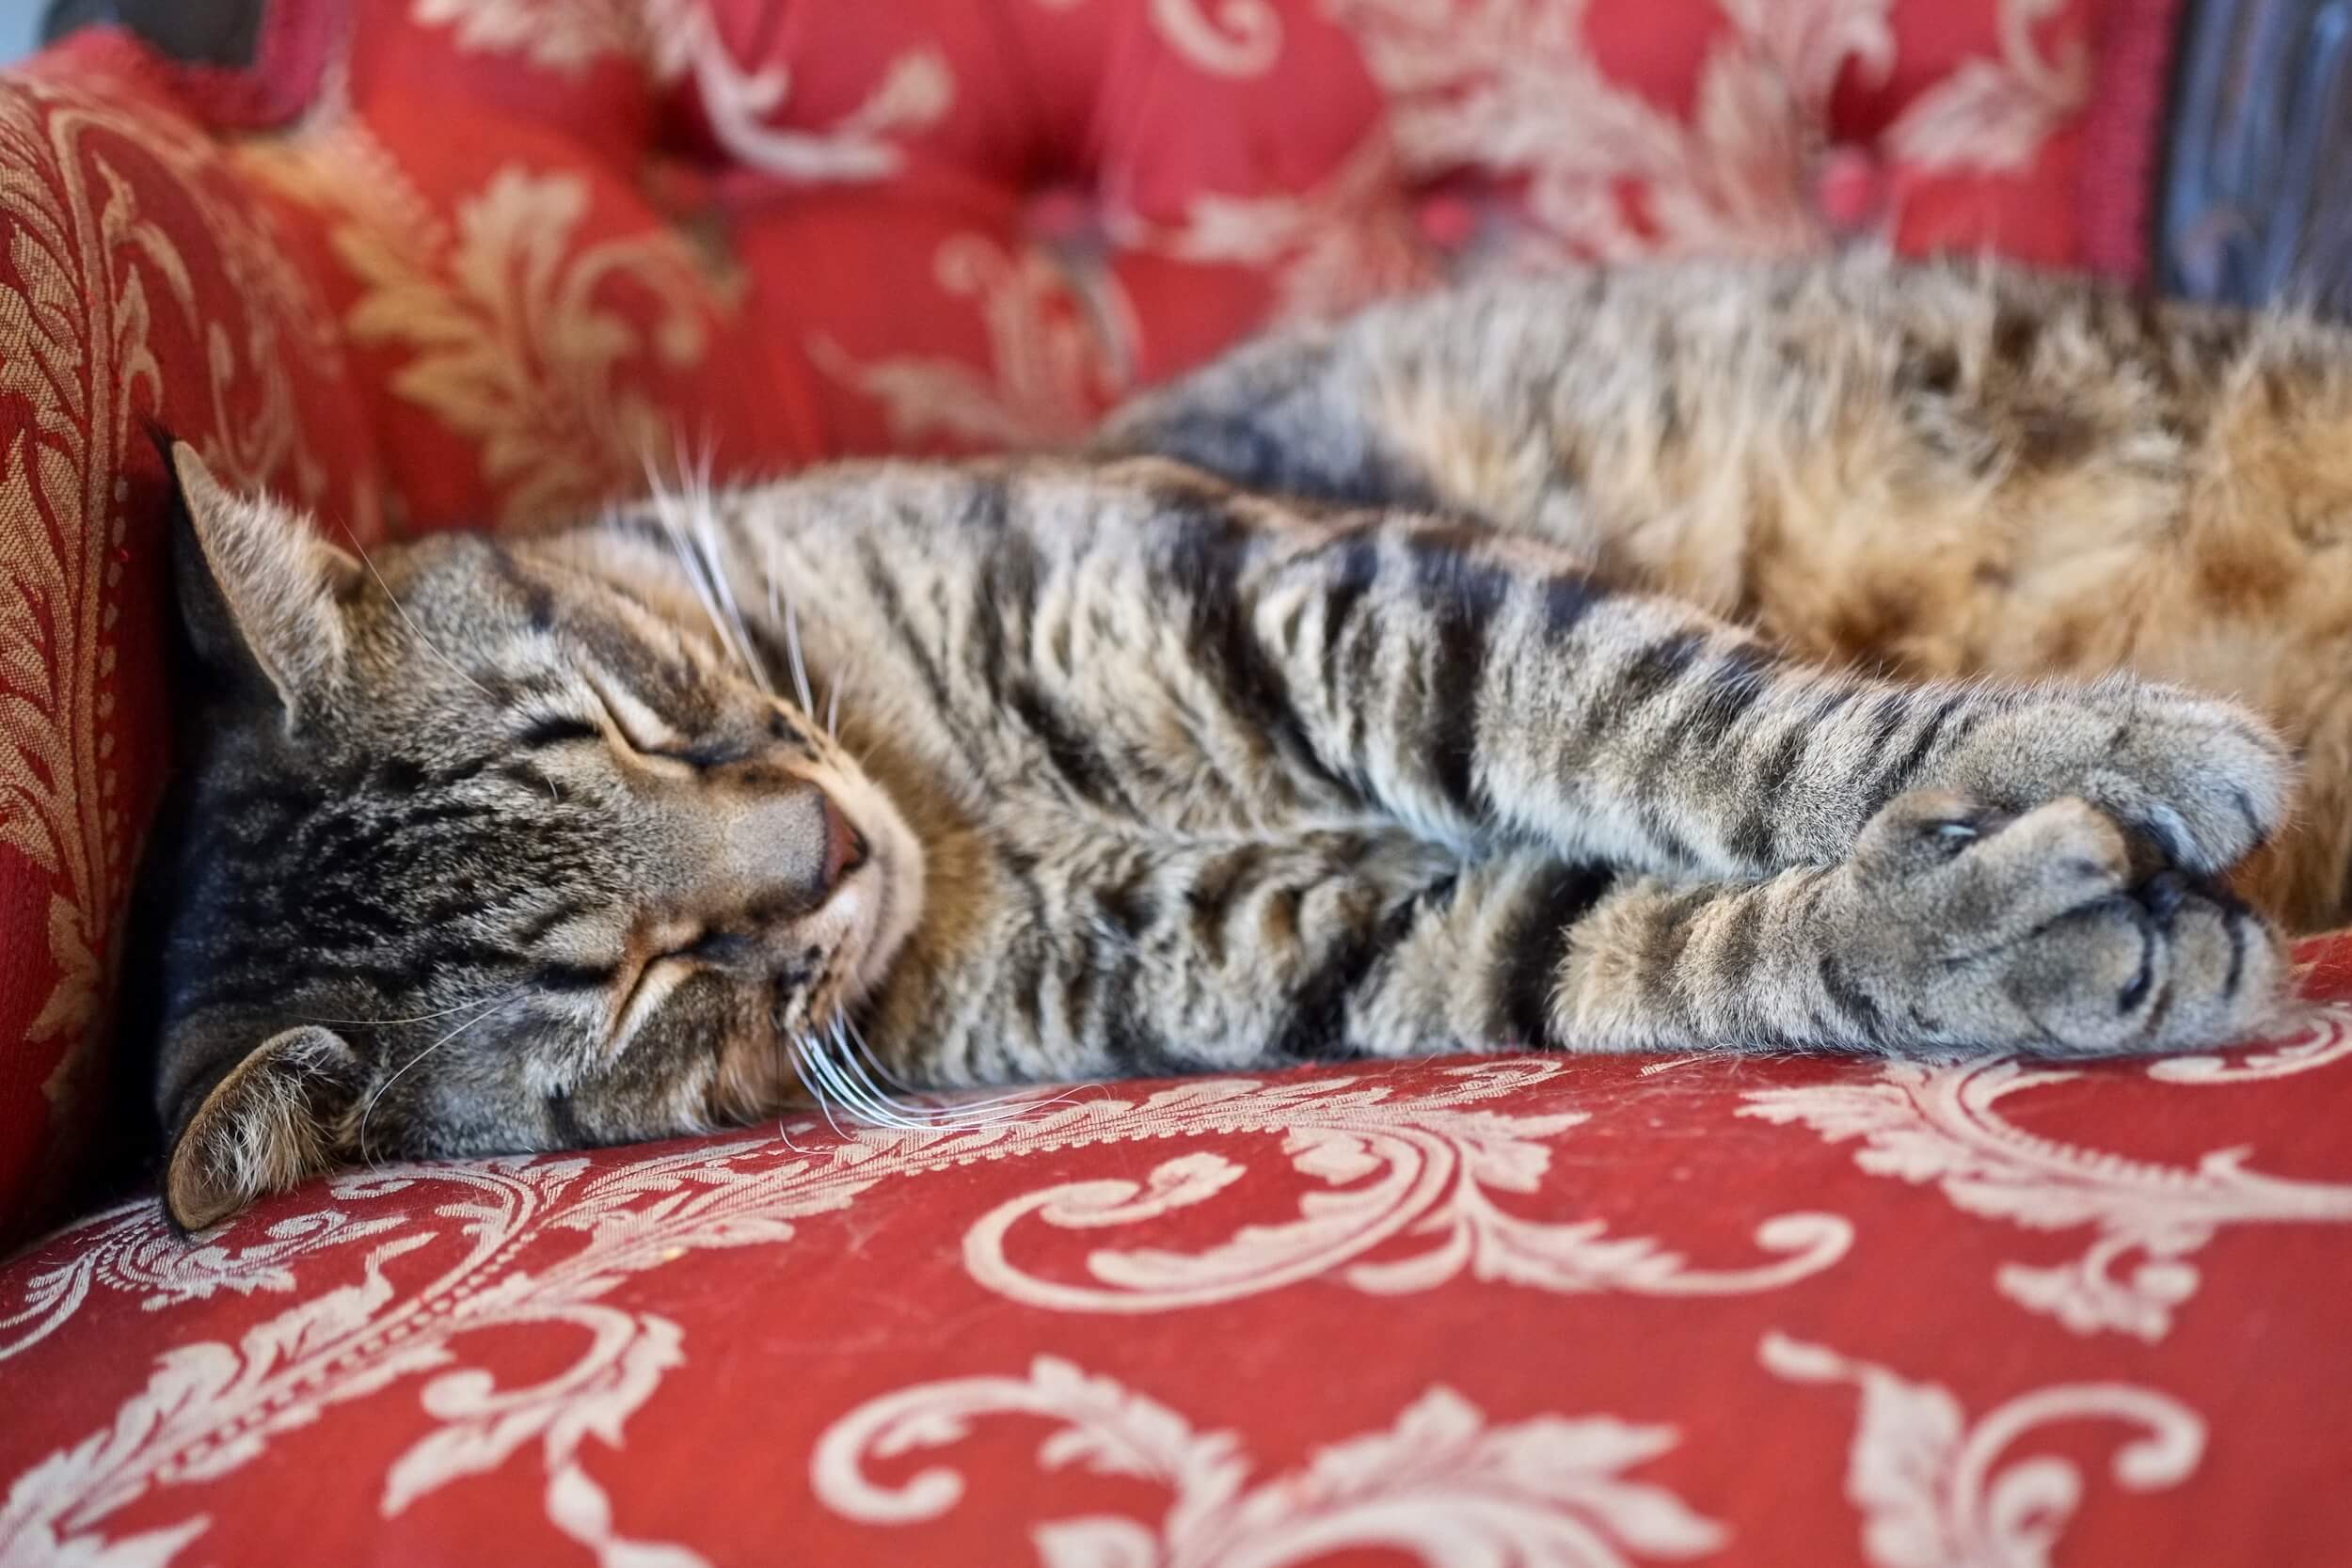 Hemingway sleeping polydactyl cat key west